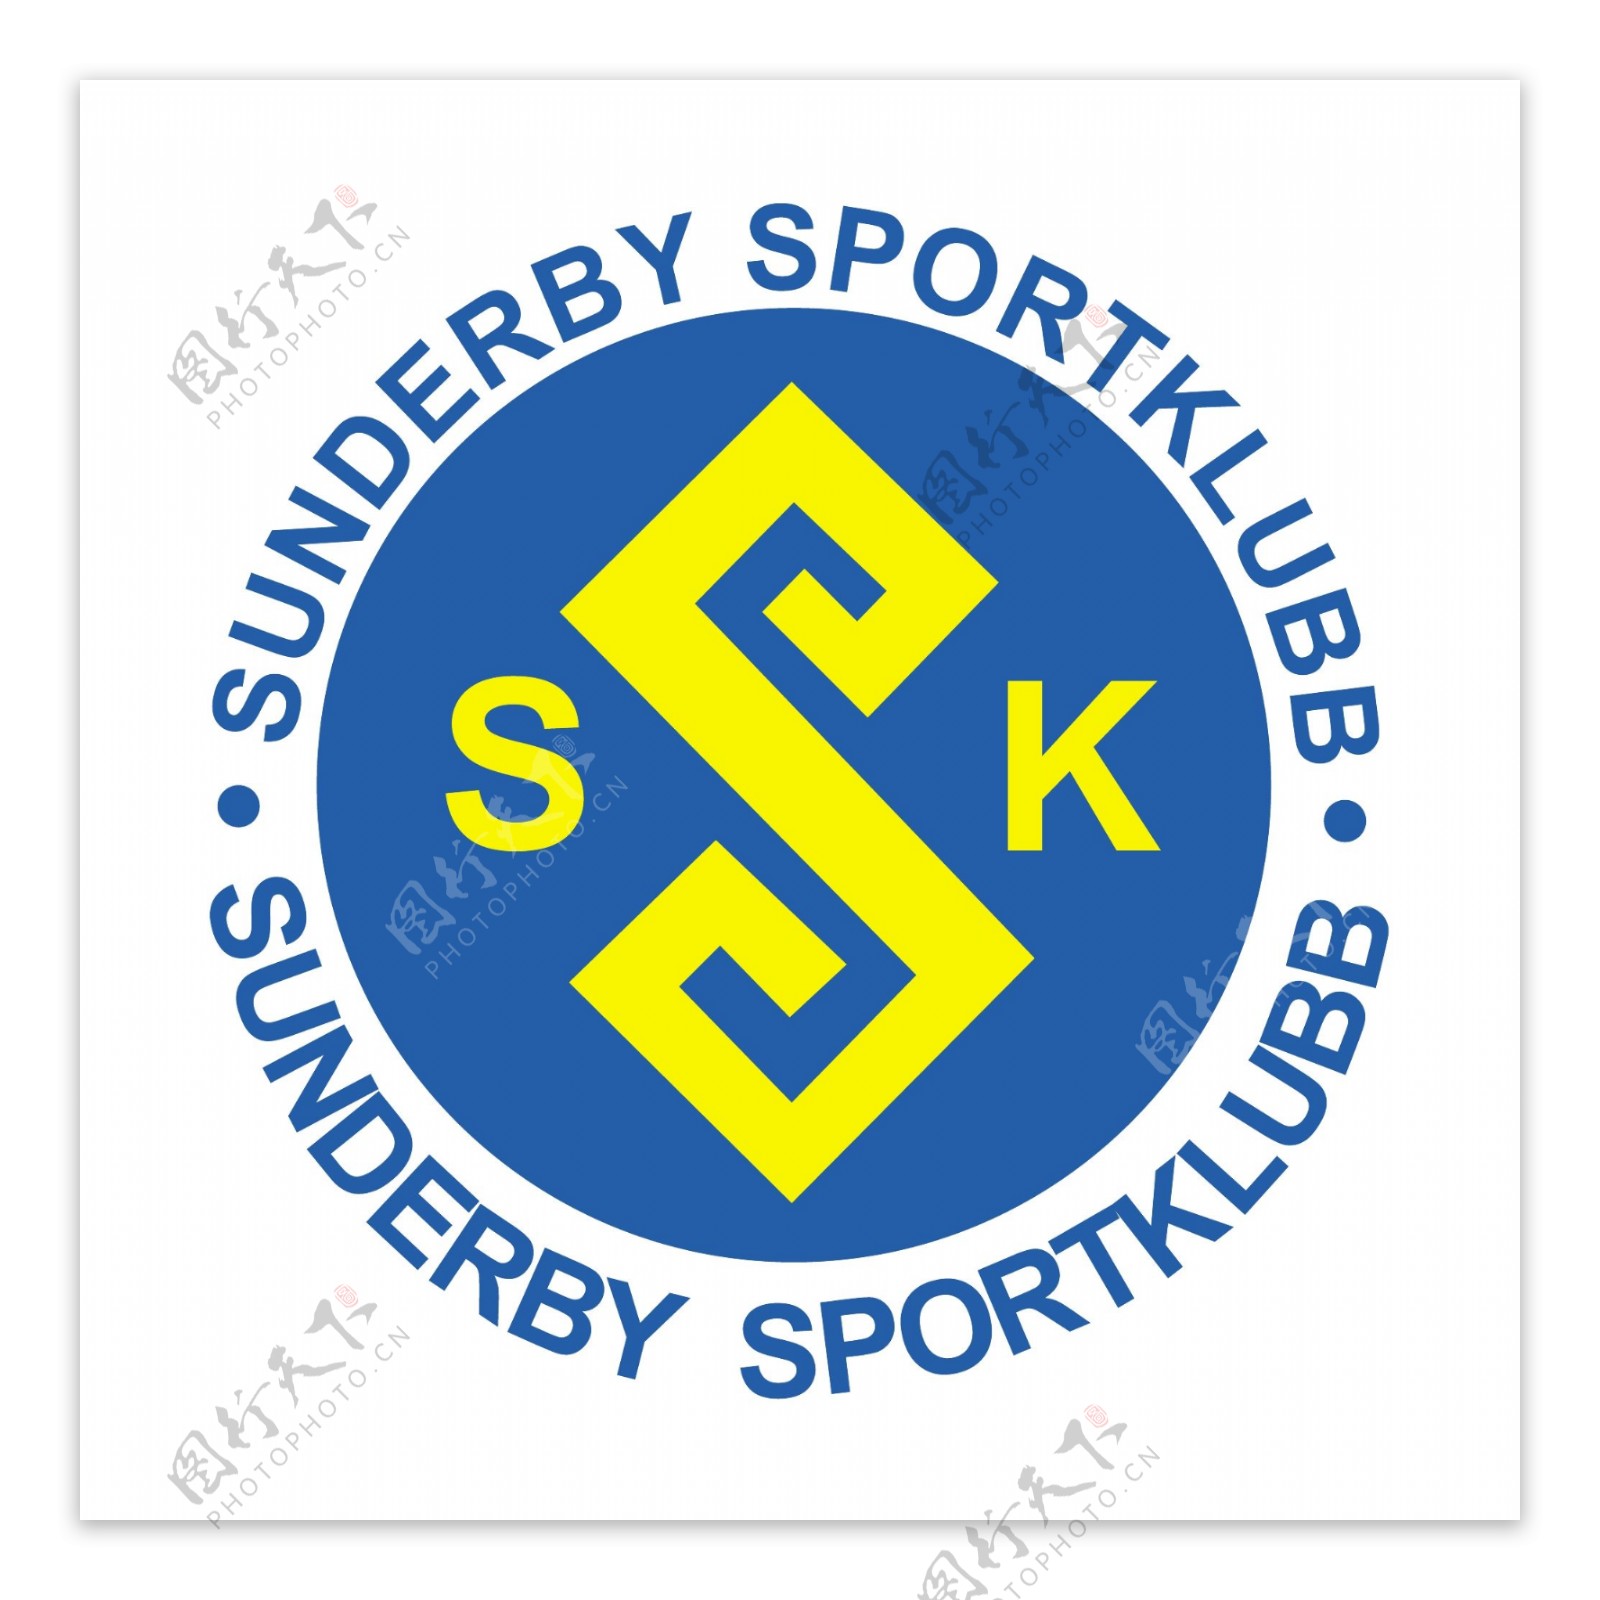 sunderbySK